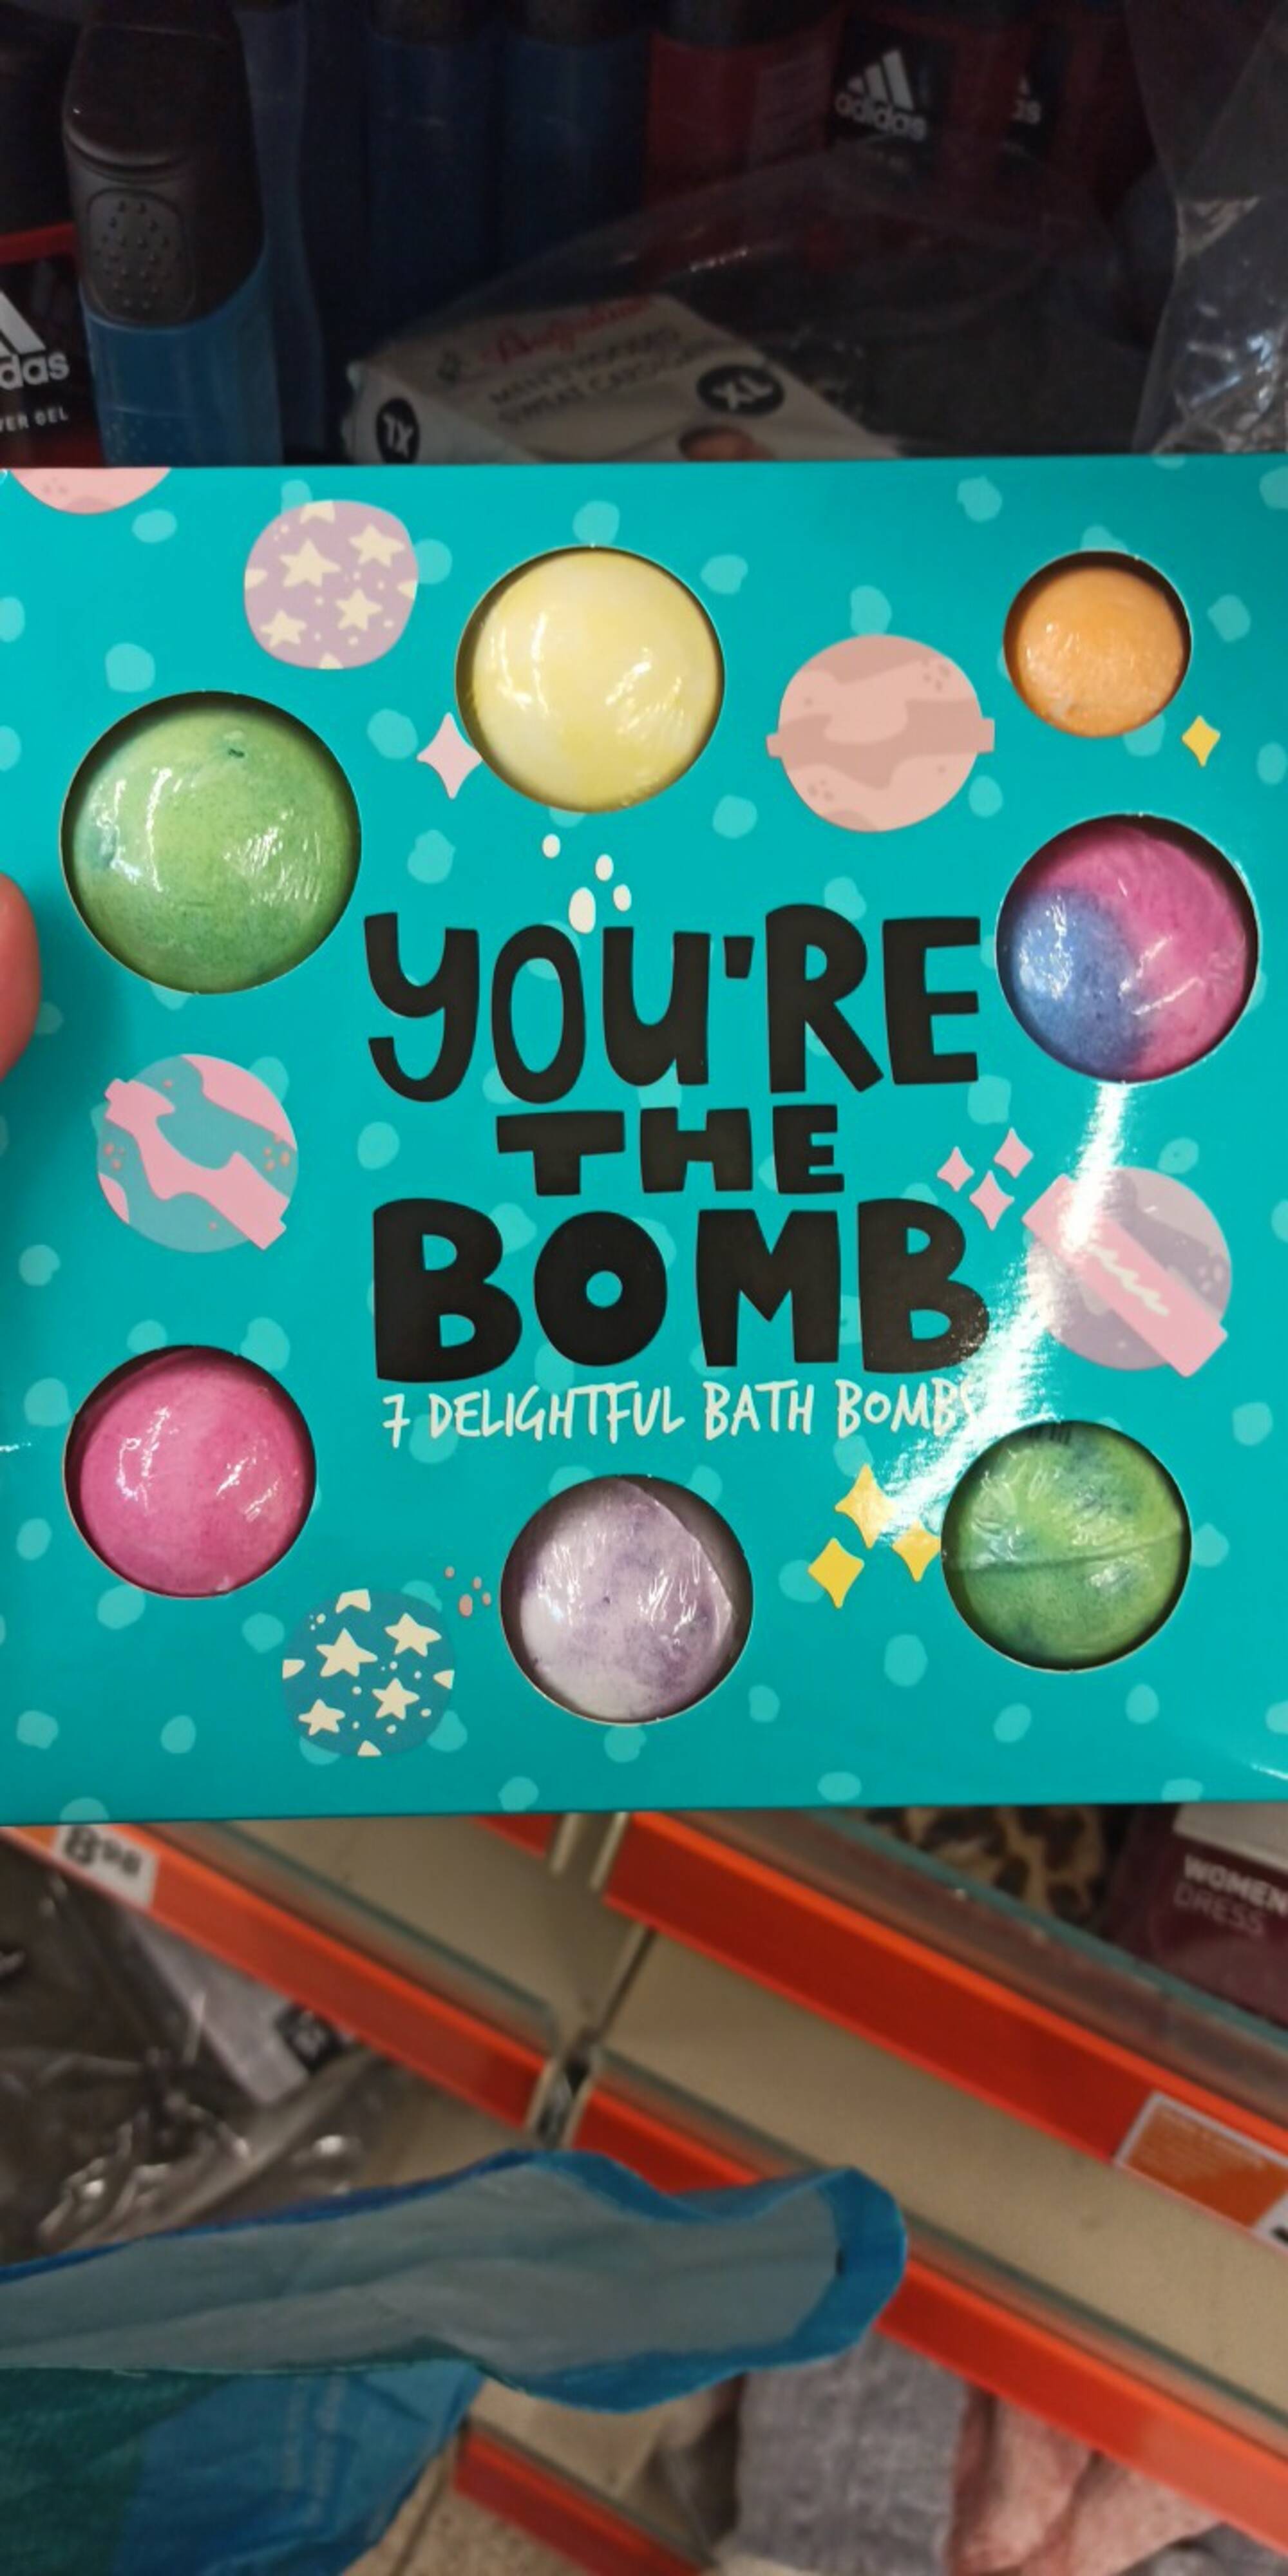 BOMB COSMETICS - You're the bomb - 7 Delightful bath bomb